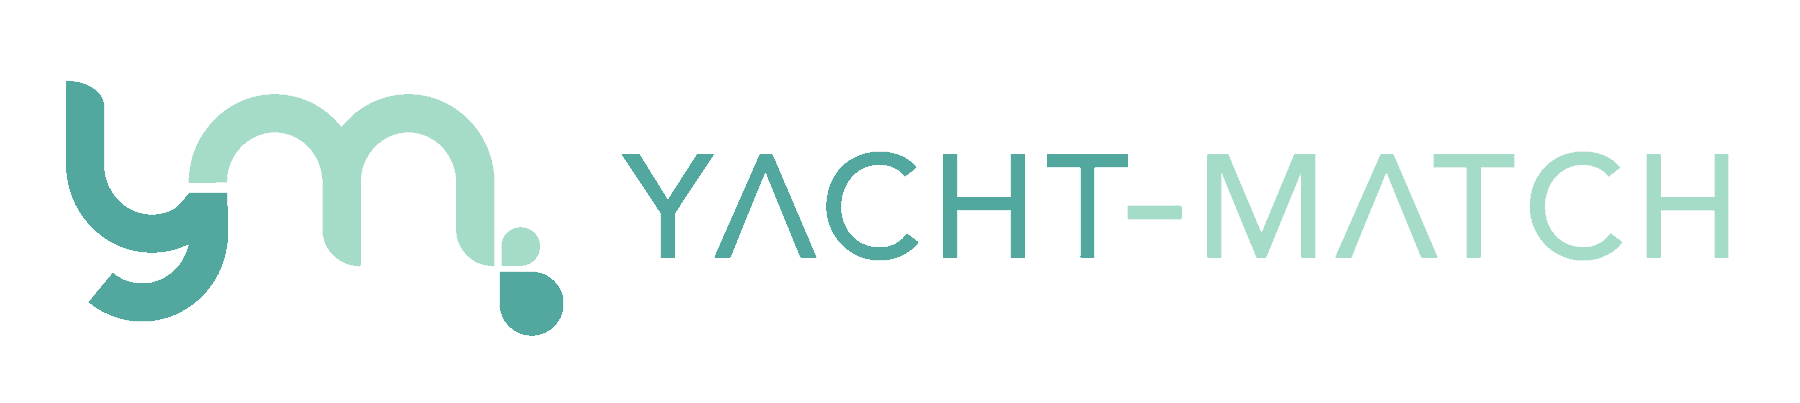 yacht match consultancy